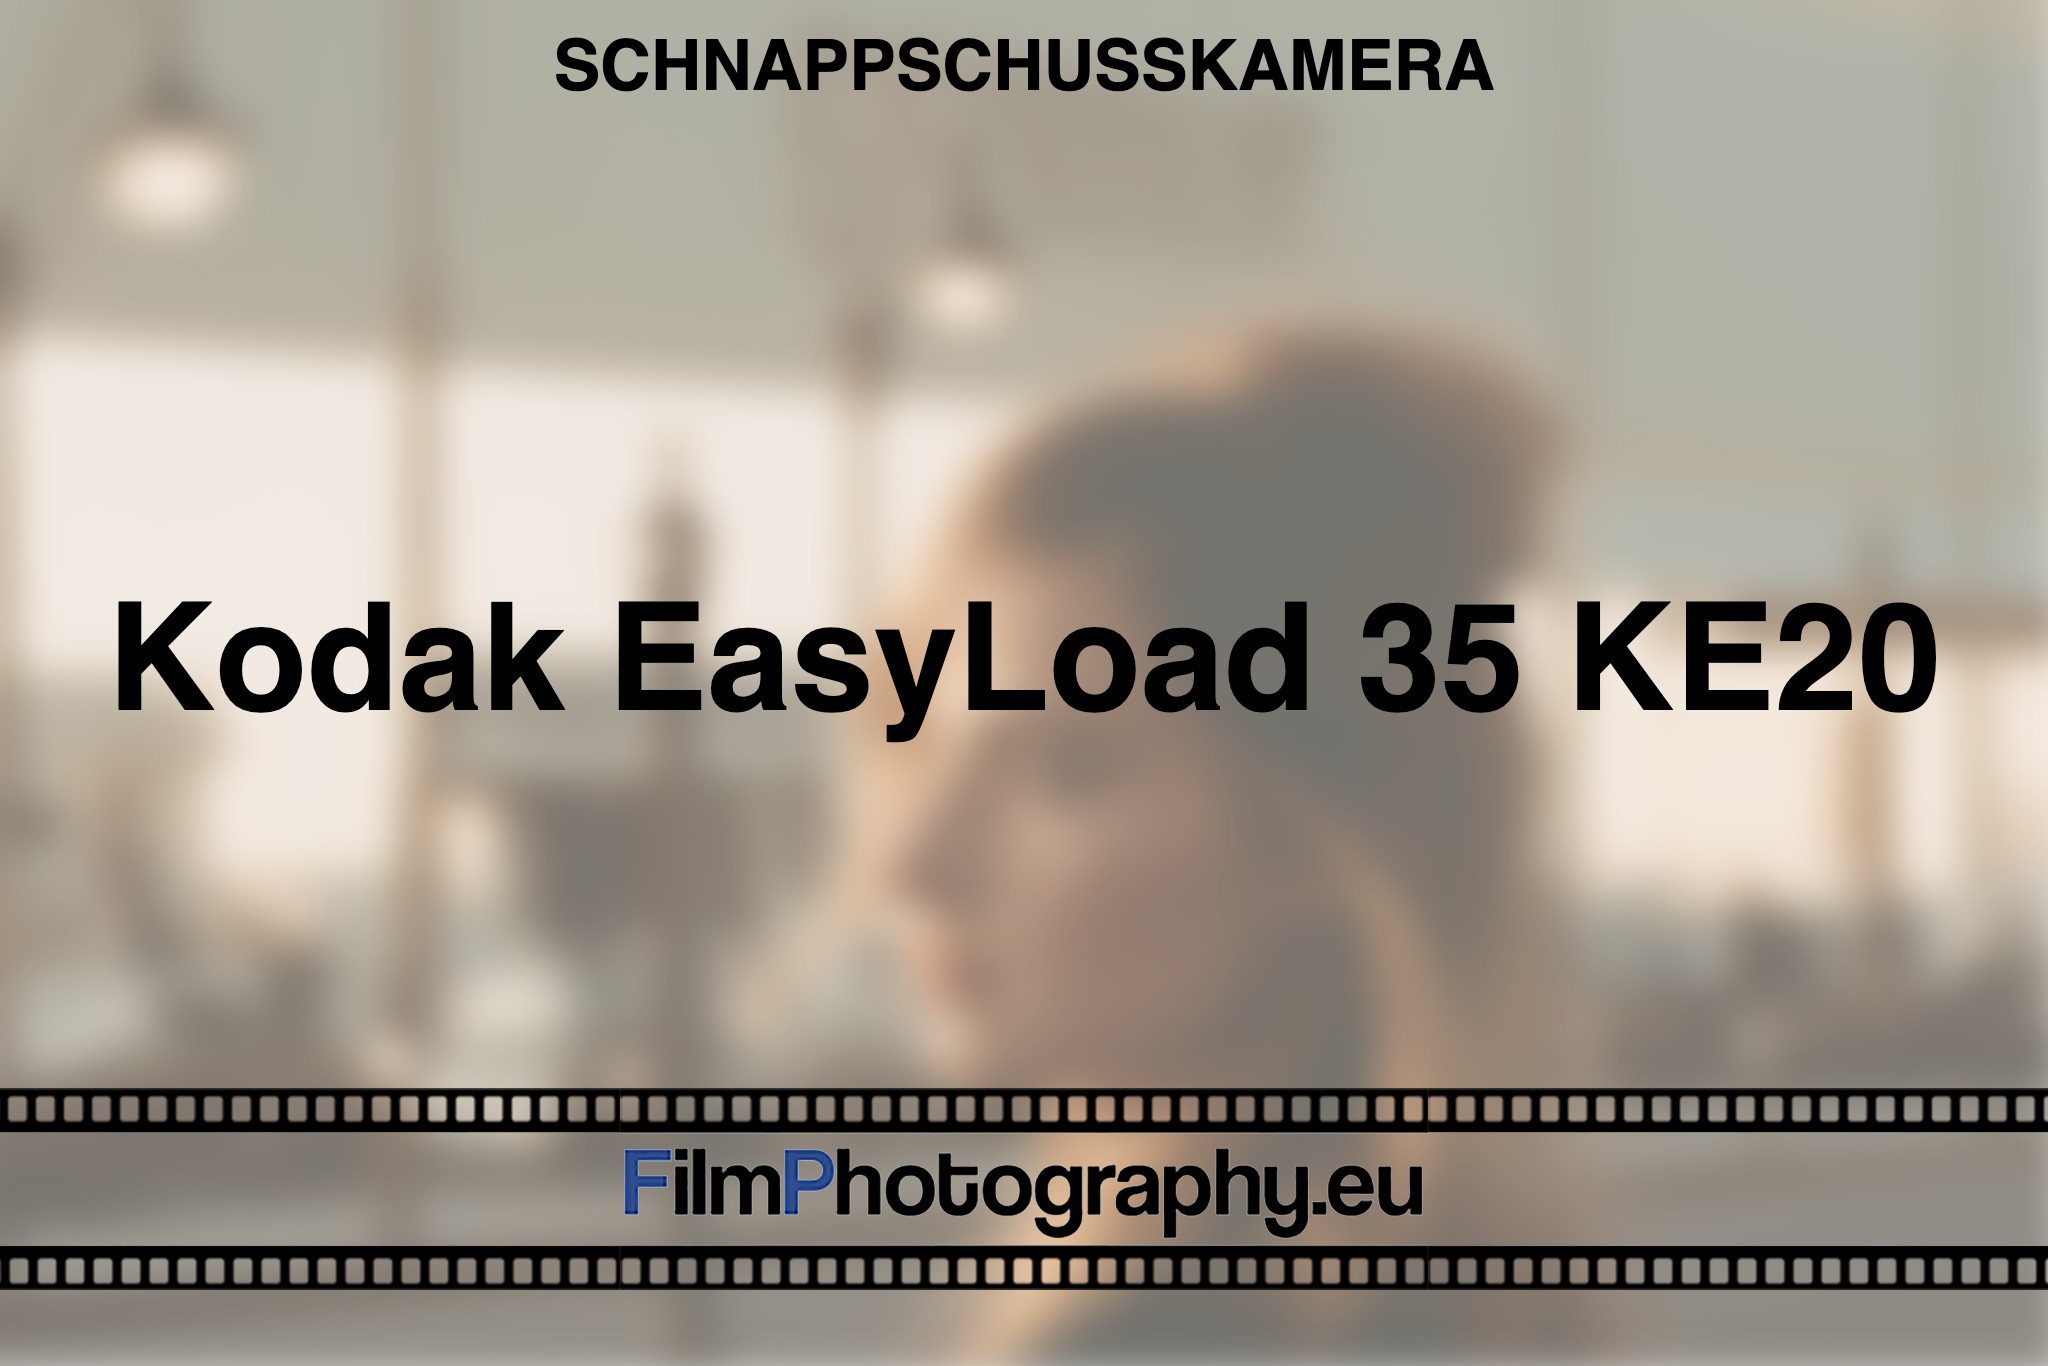 kodak-easyload-35-ke20-schnappschusskamera-bnv